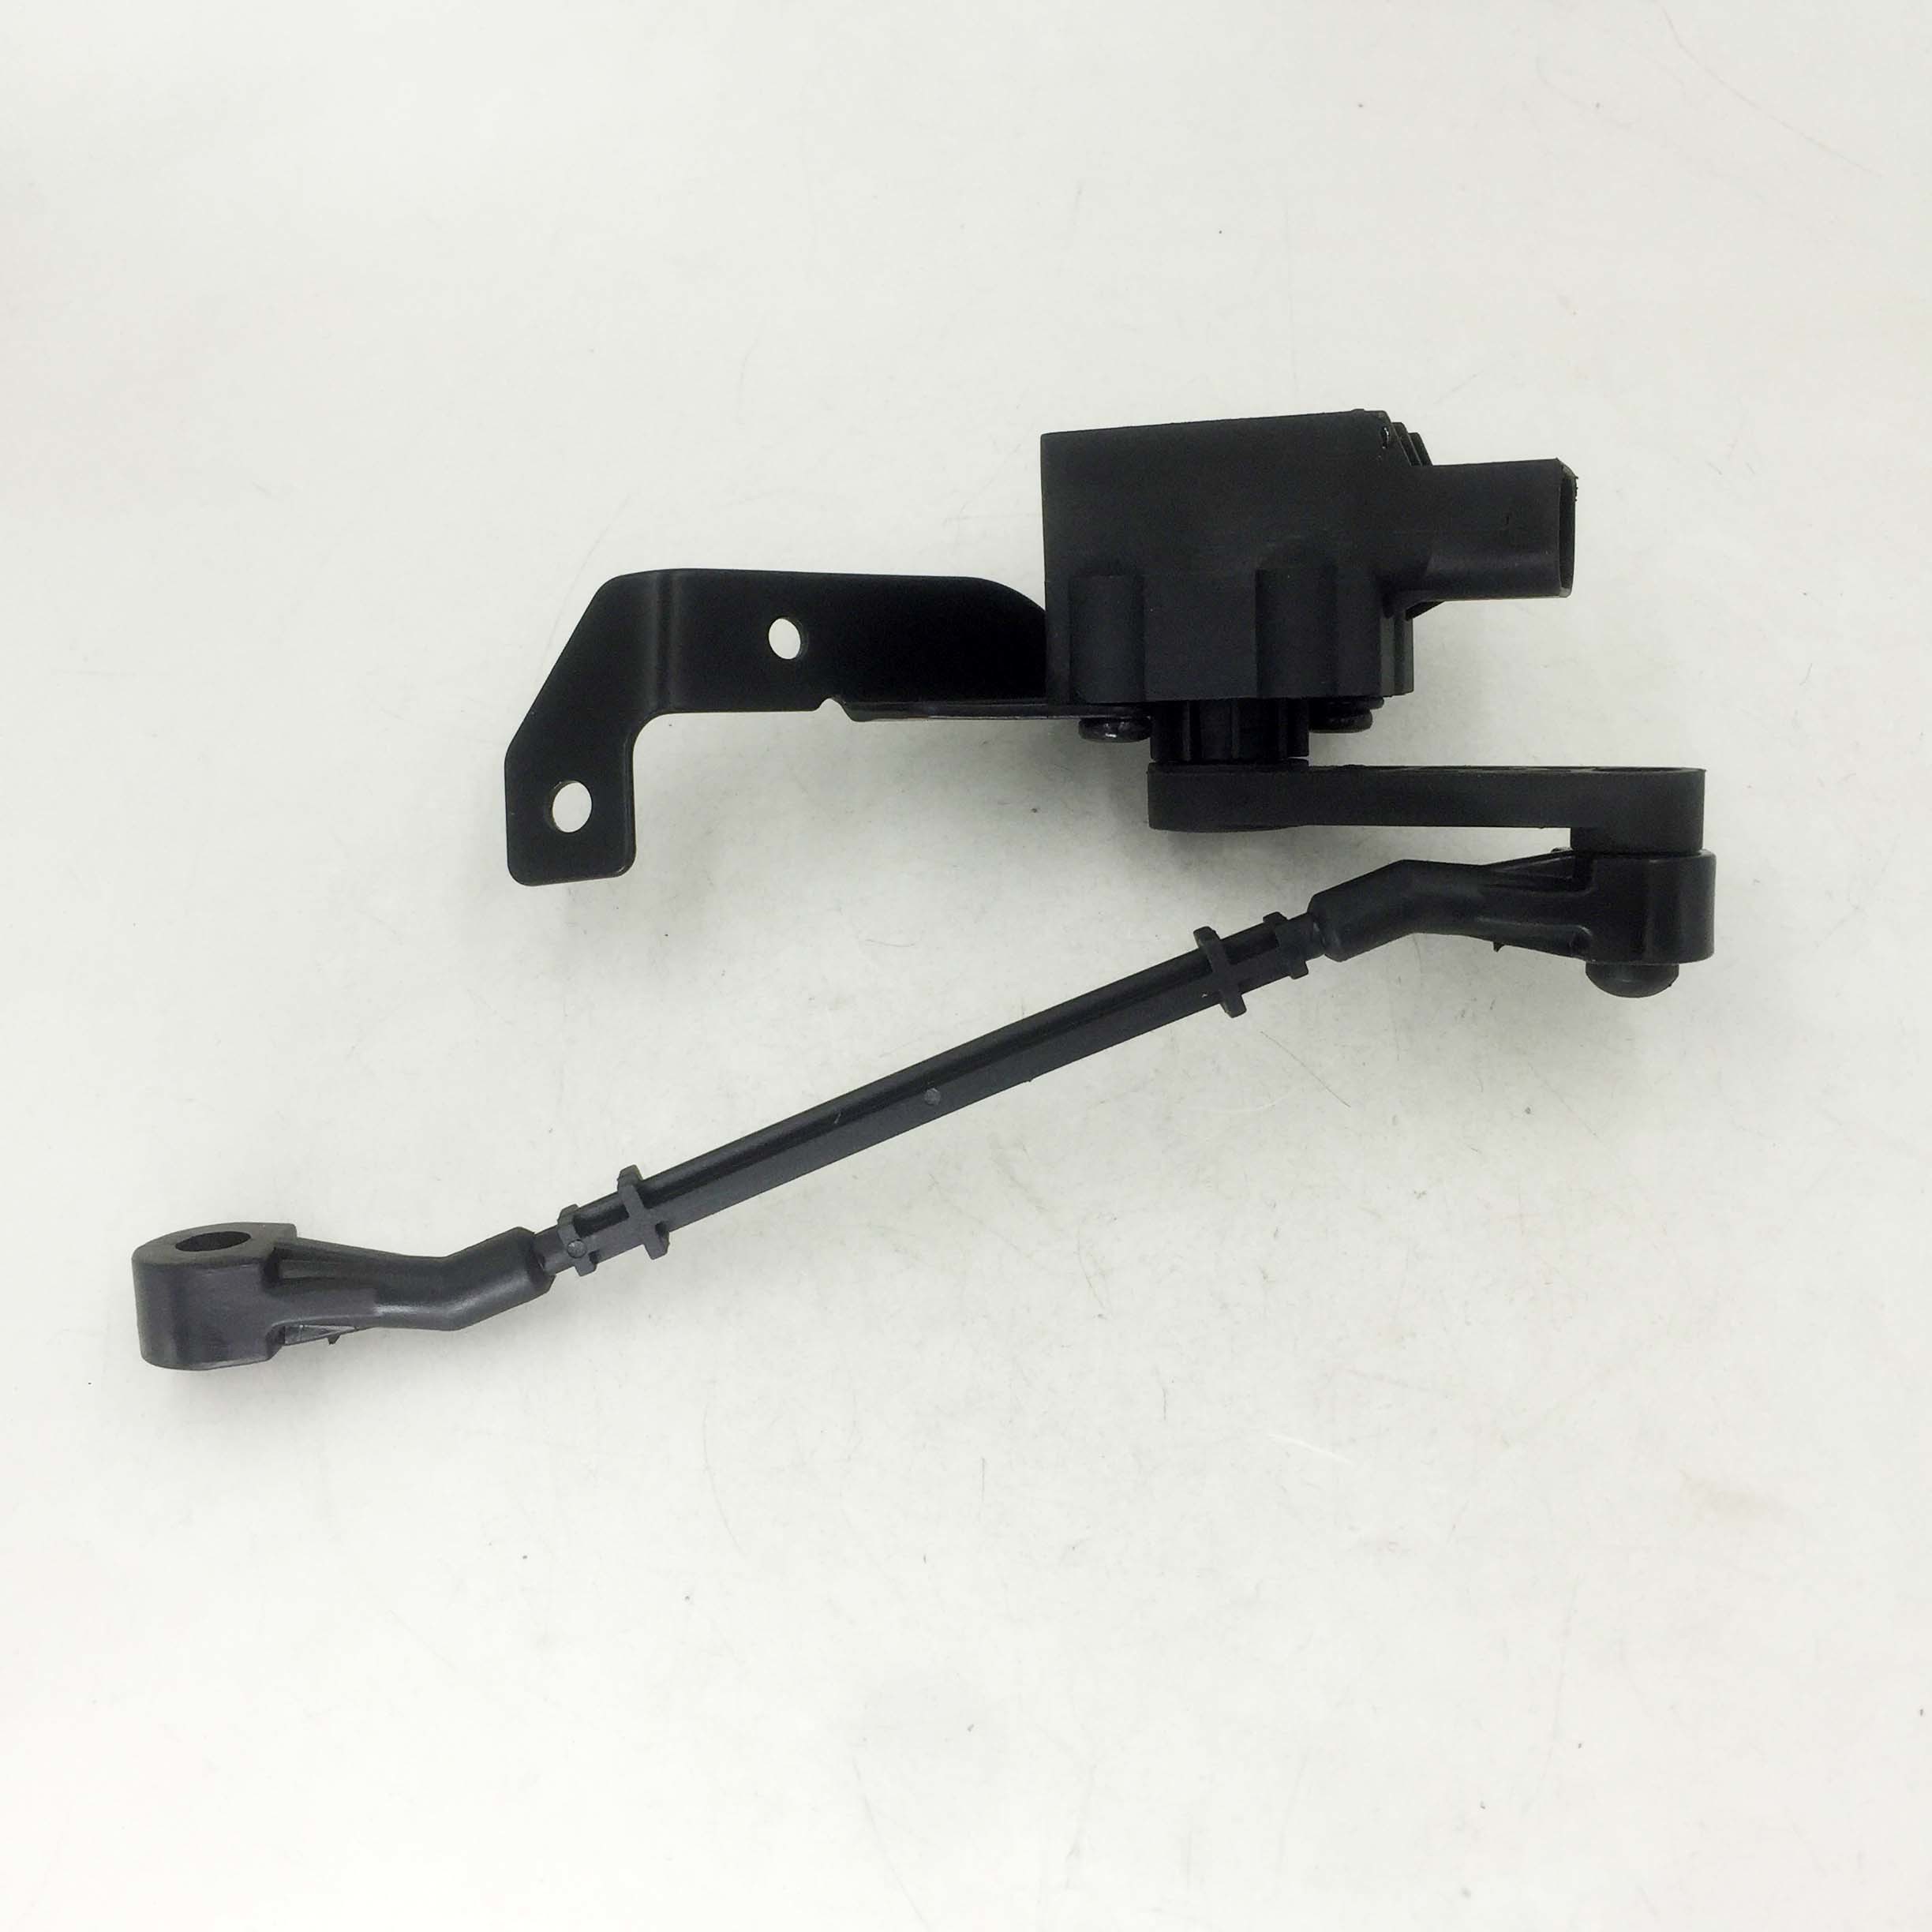 Headlight Level sensor Suspension height sensor for Land Rover BMW RQH500421 31126751328-01